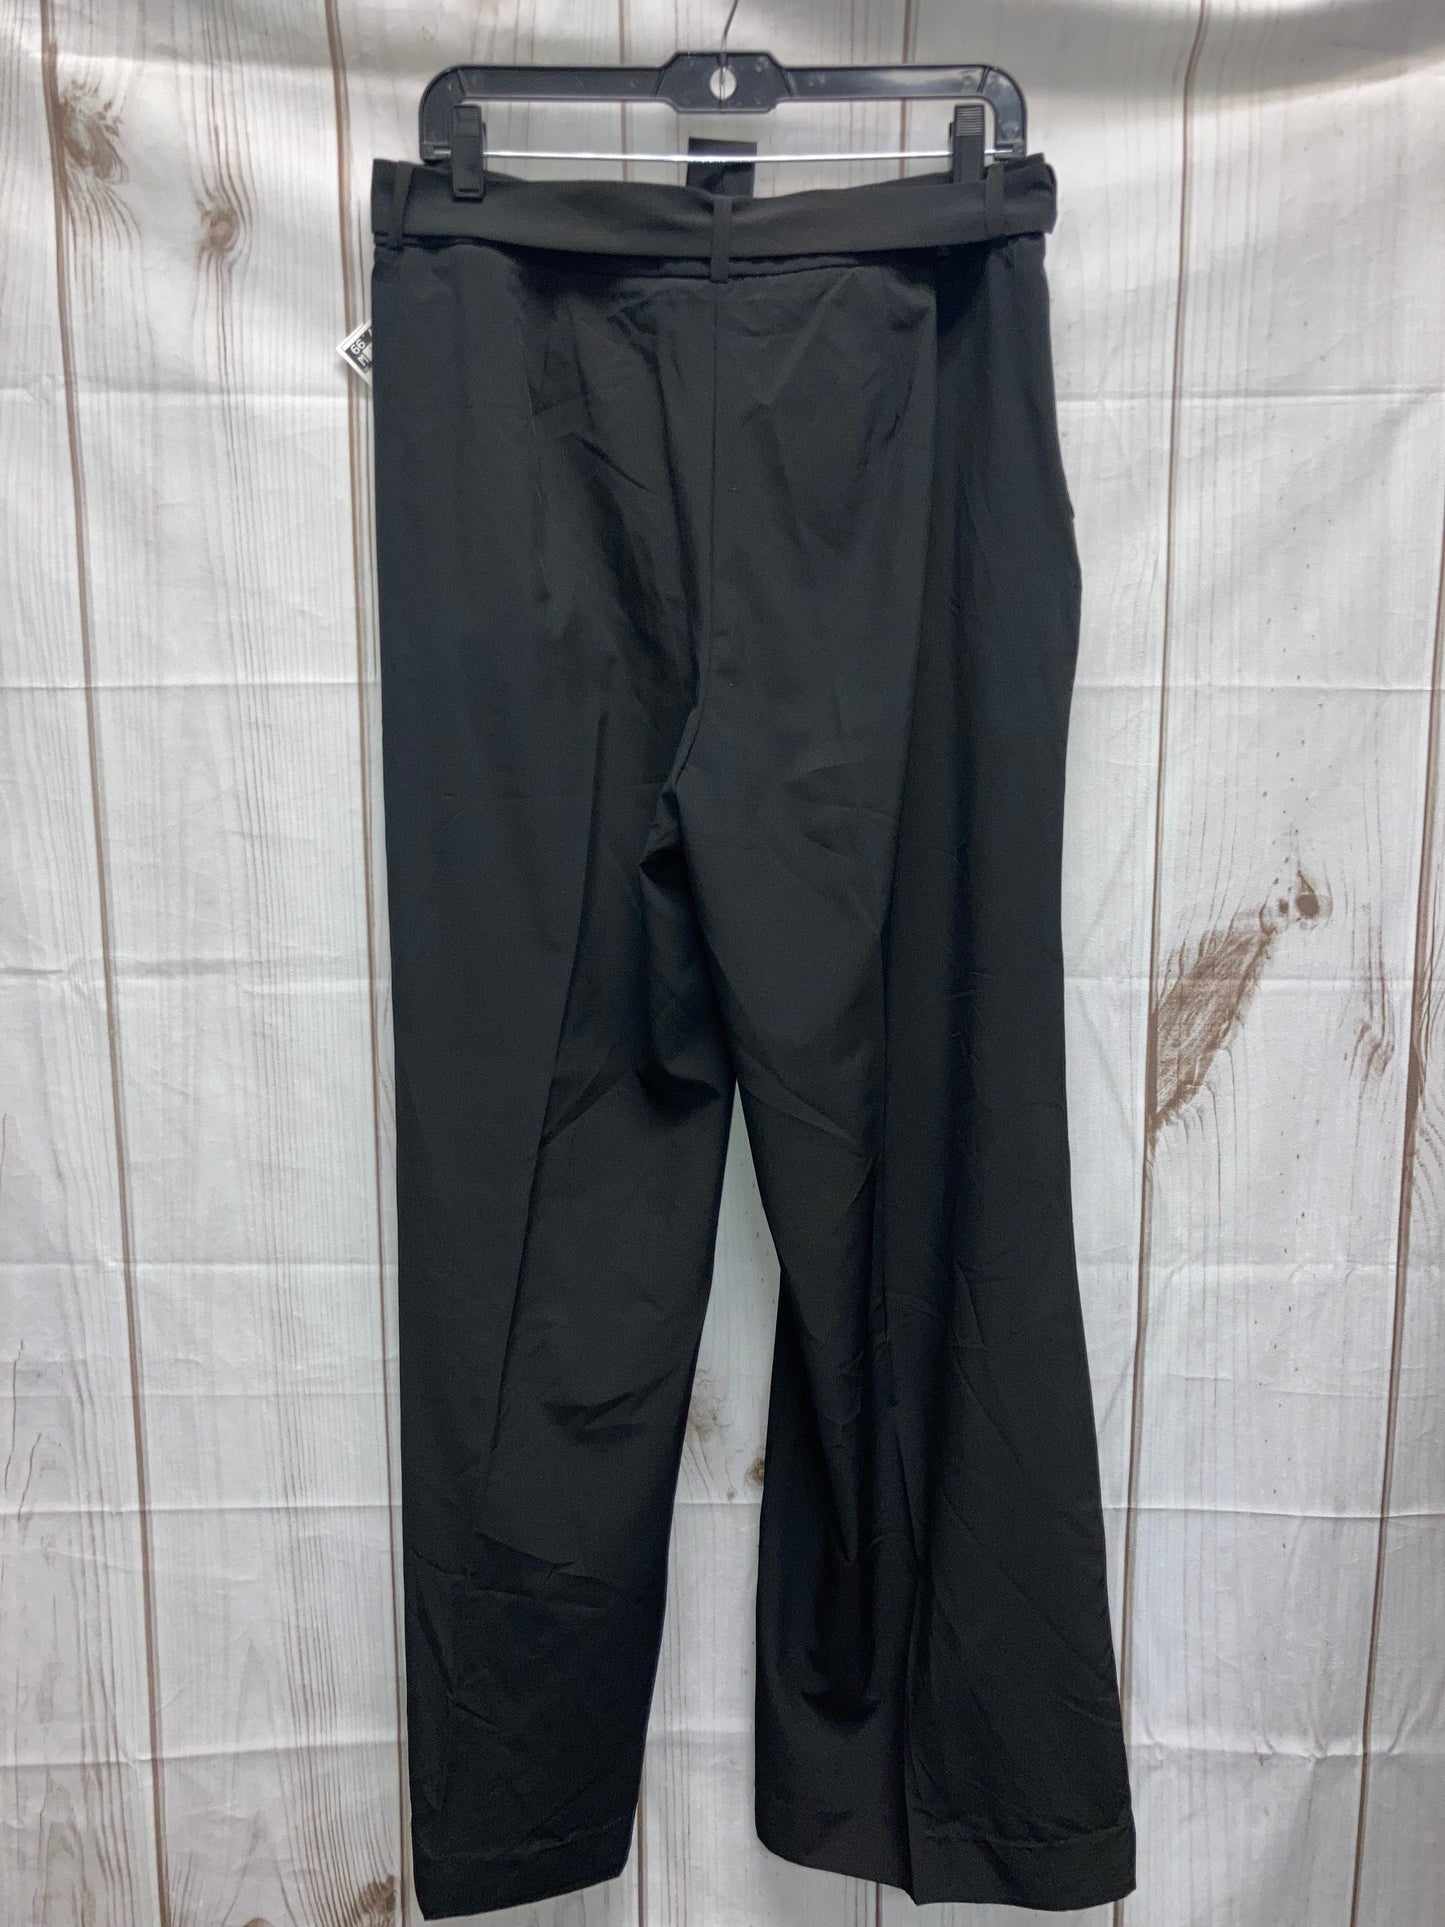 Pants Work/dress By Calvin Klein  Size: 12